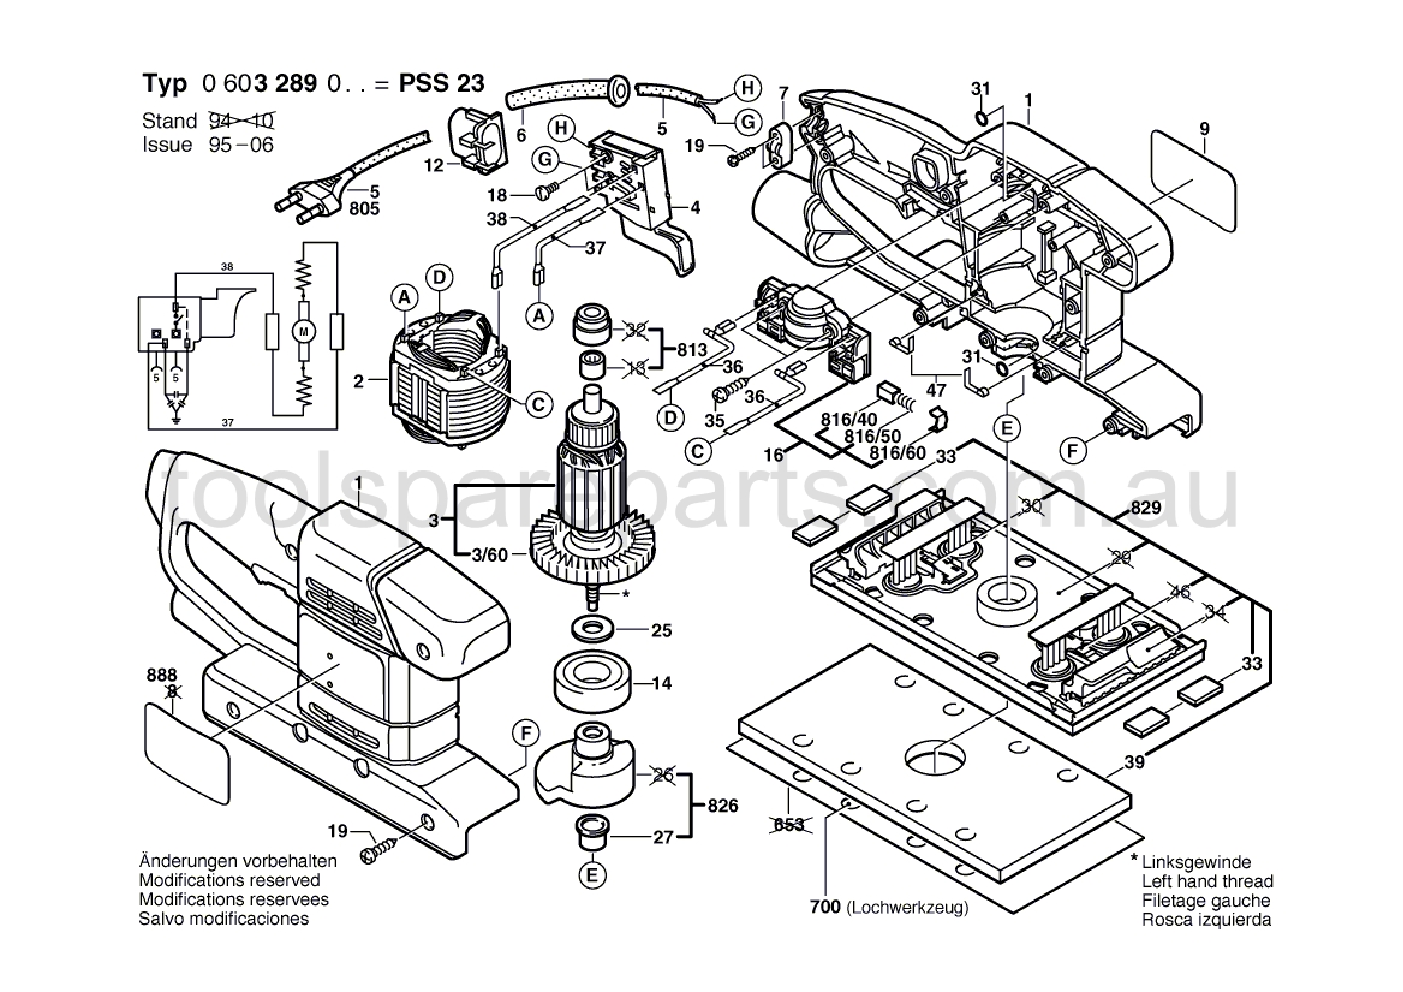 Bosch PSS 23 0603289037  Diagram 1